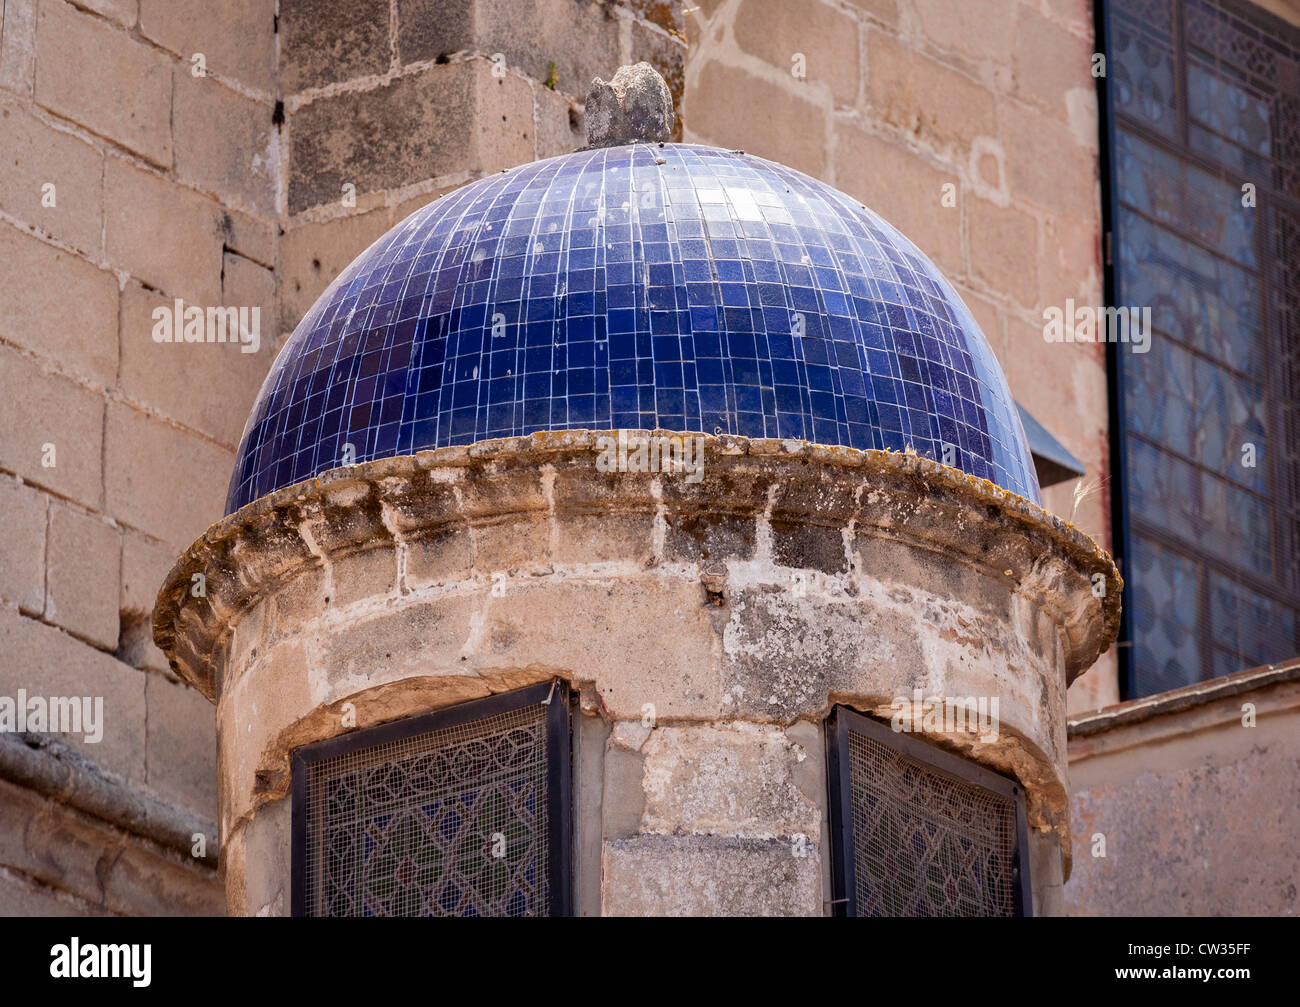 El Puerto De Santa Maria, Andalusien, Spanien, Europa. Blau gekachelten Kuppel-Dach-Funktion auf die Iglesia Mayor Prioral. [Priory-Kirche] Stockfoto